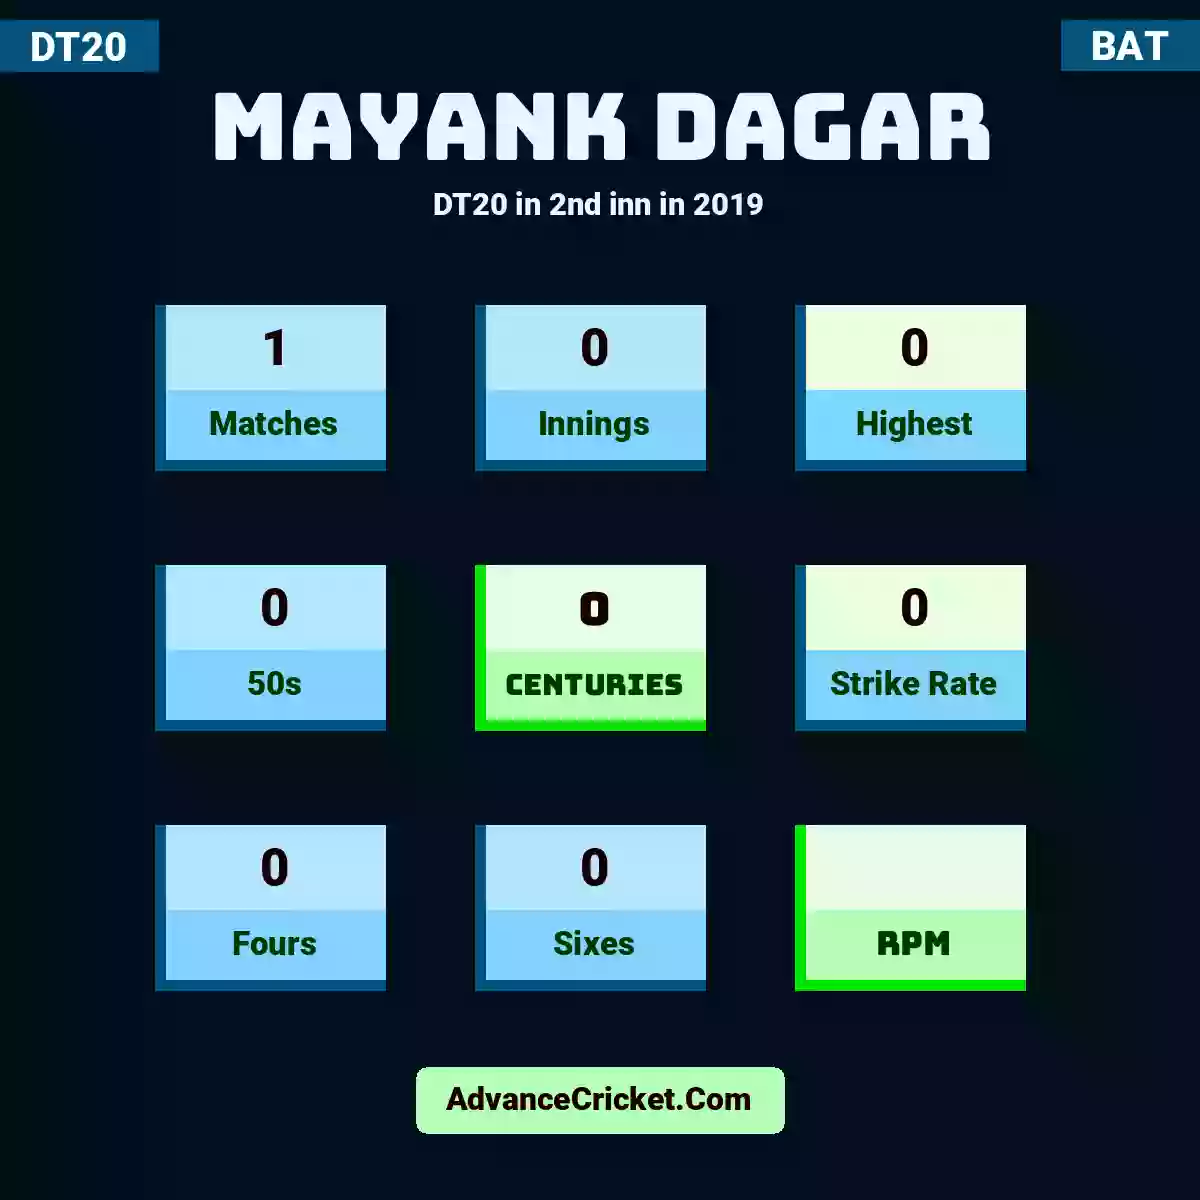 Mayank Dagar DT20  in 2nd inn in 2019, Mayank Dagar played 1 matches, scored 0 runs as highest, 0 half-centuries, and 0 centuries, with a strike rate of 0. M.Dagar hit 0 fours and 0 sixes.